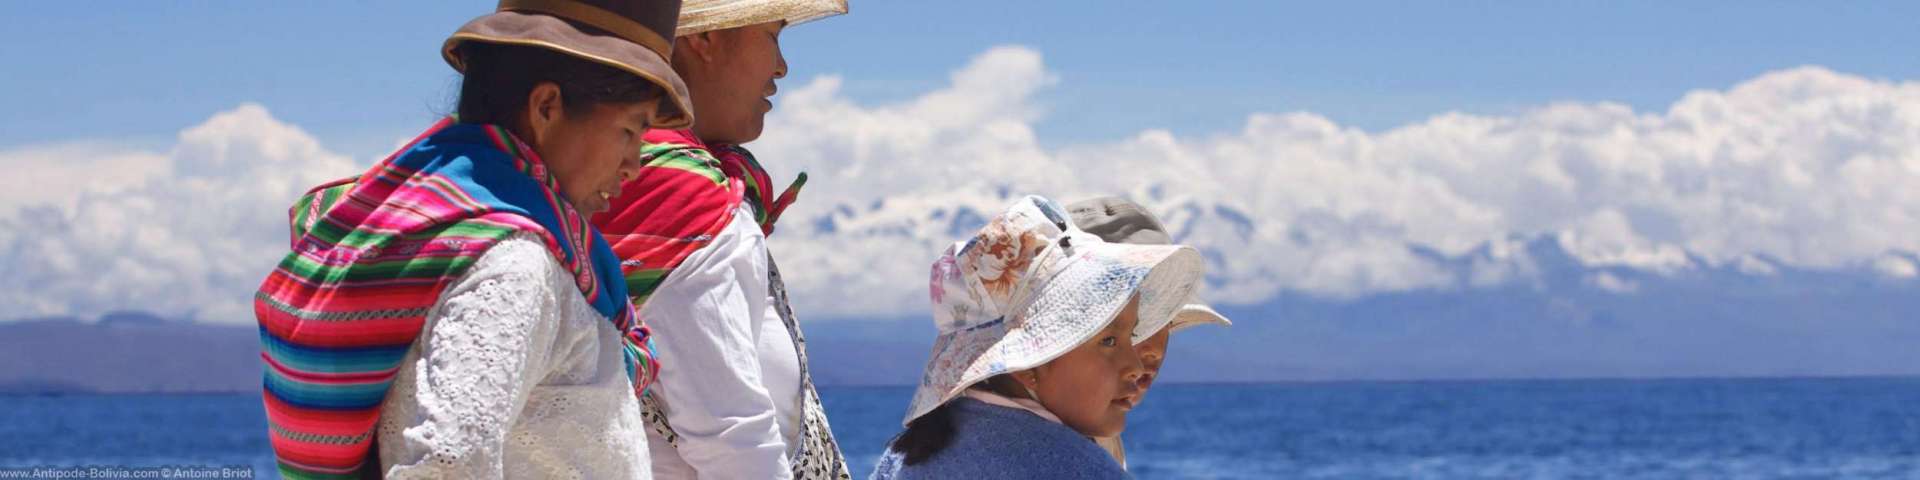 Peuples et cultures boliviennes